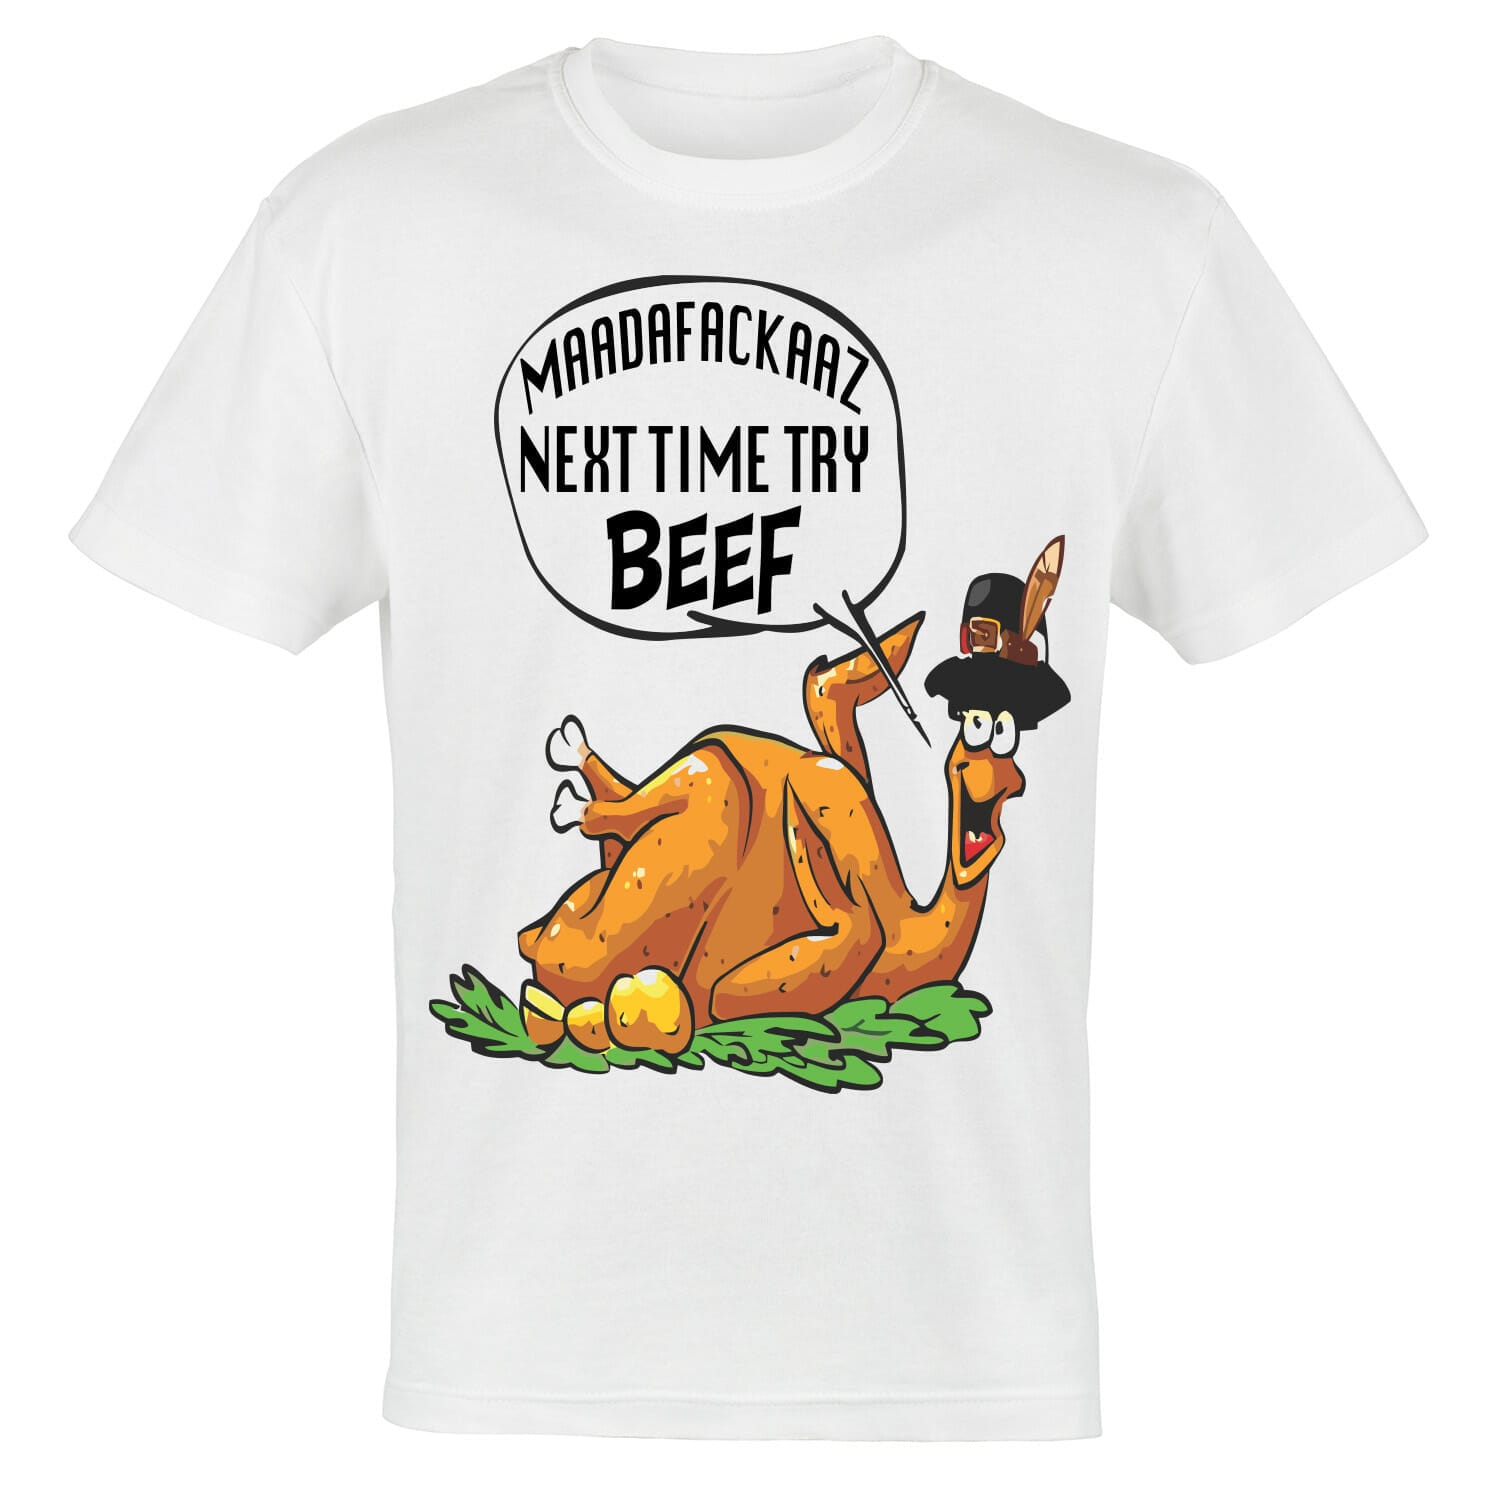 Madafakaa next time try beef tshirt design